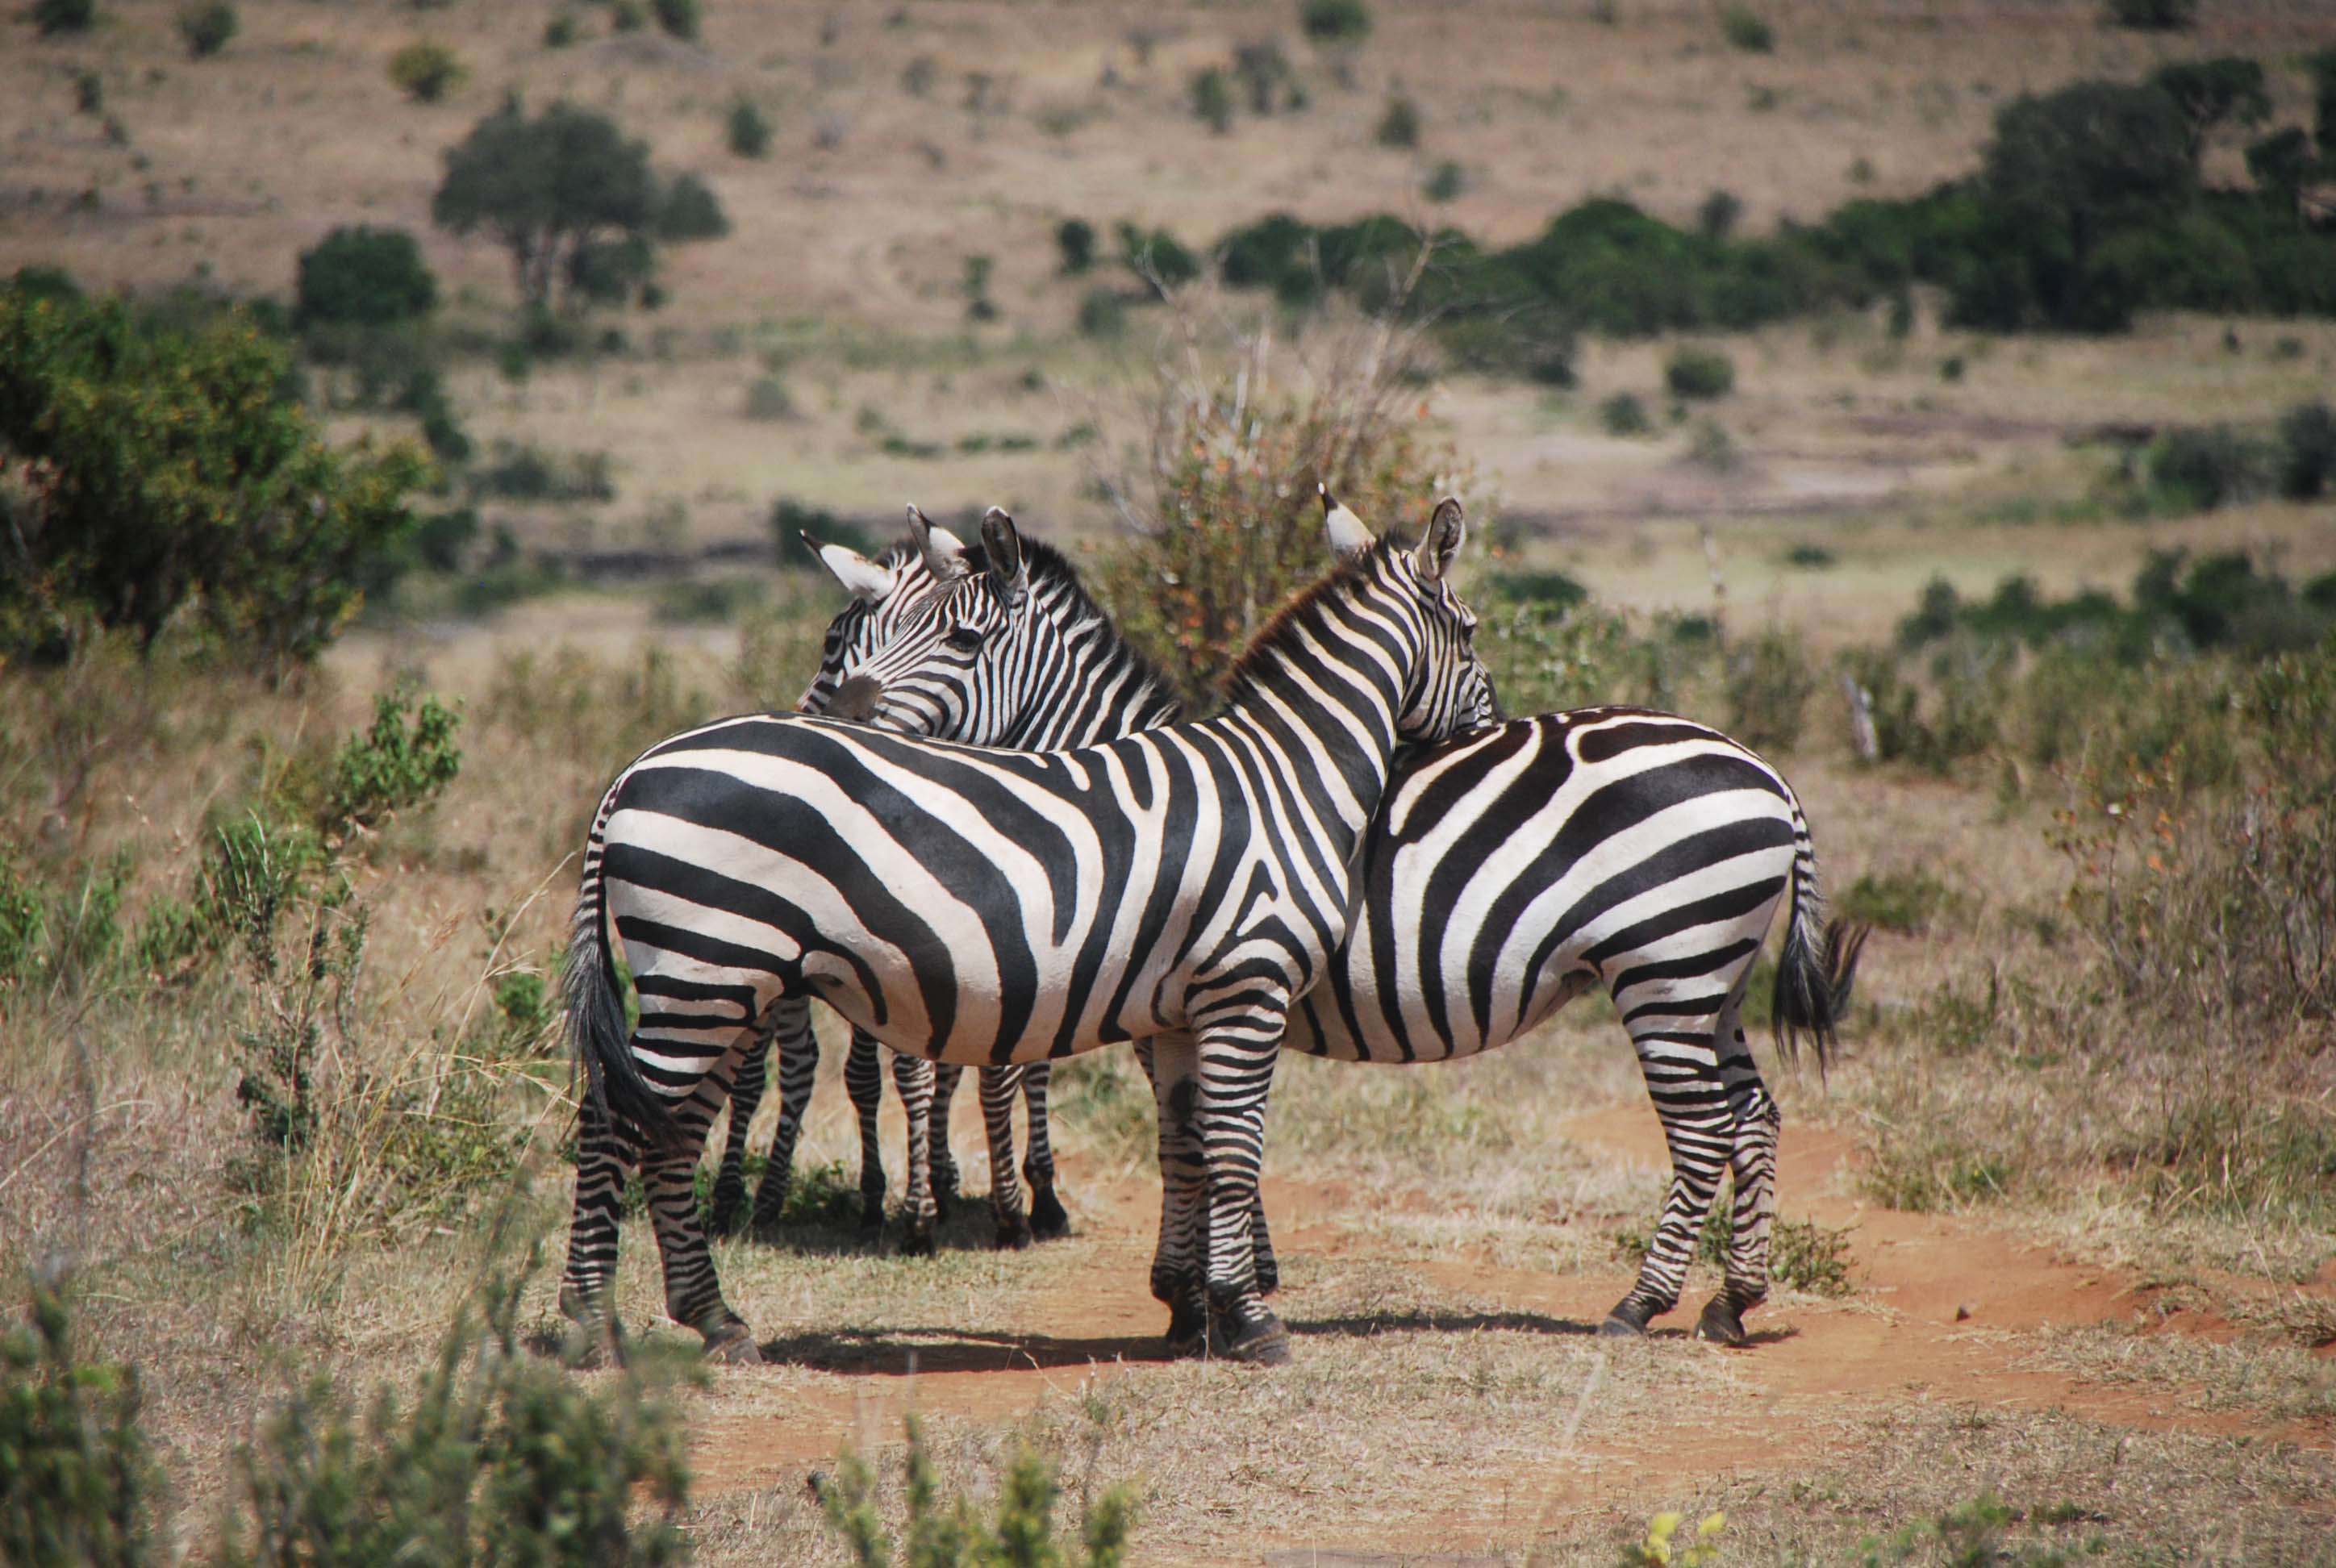 Nuestro primer safari - Regreso al Mara - Kenia (9)